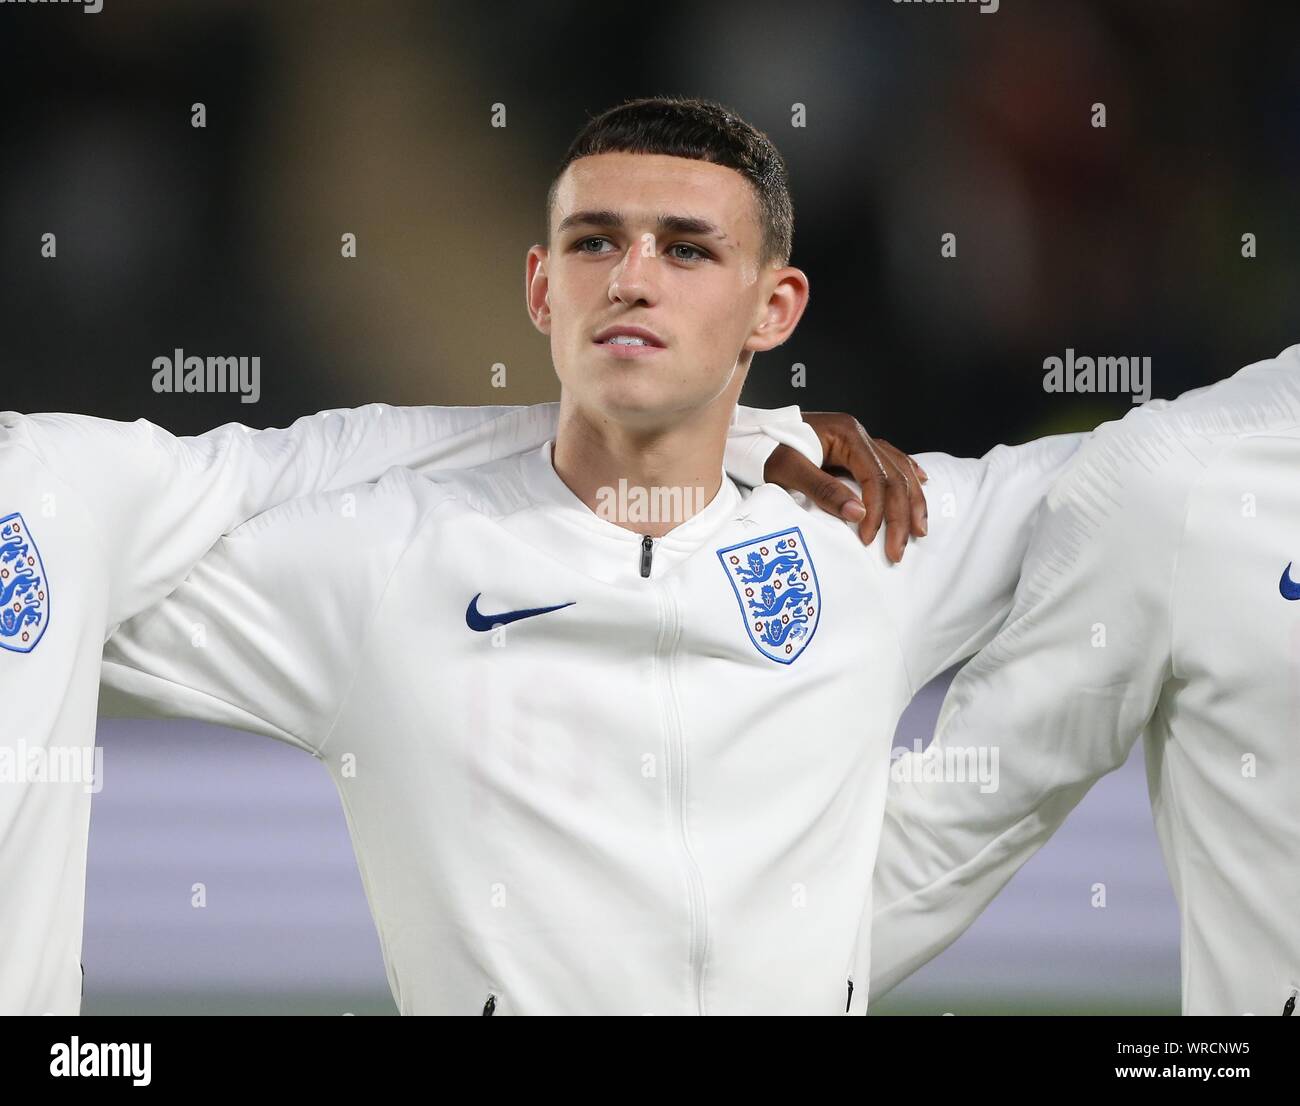 PHIL FODEN, ENGLAND U21, 2019 Stock Photo